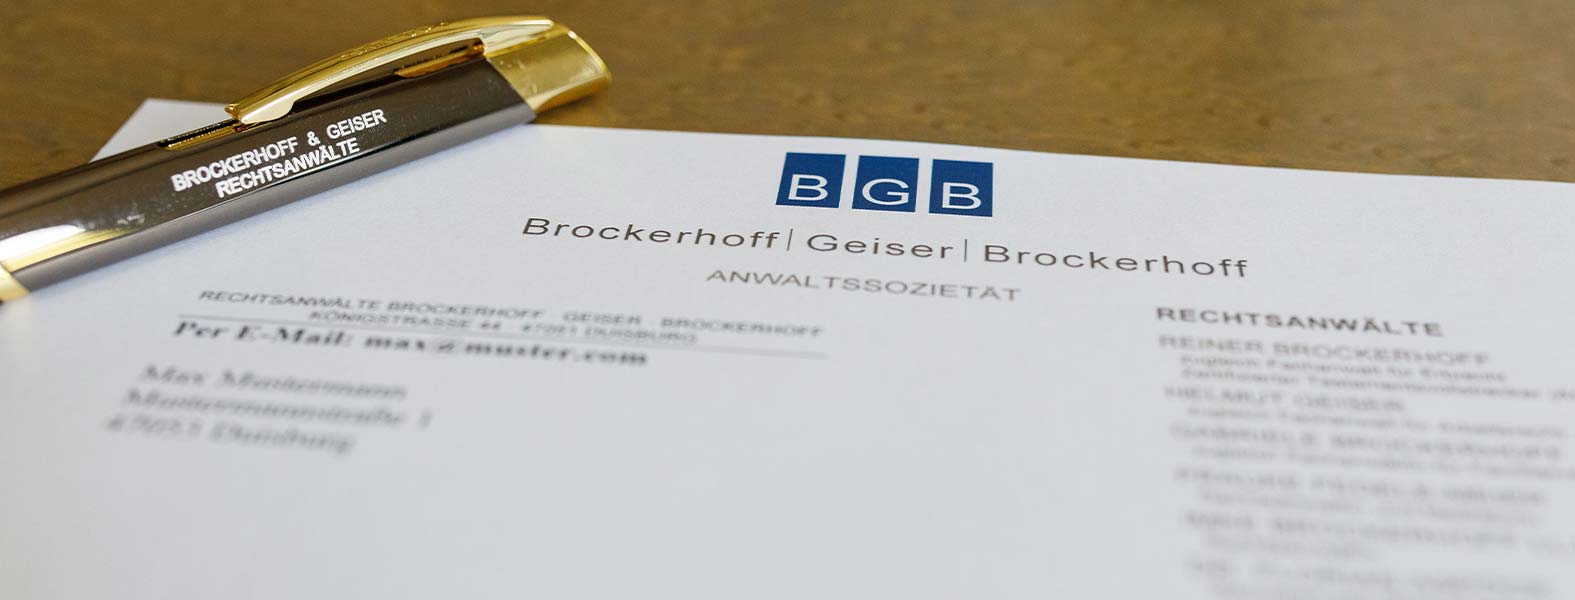 Rechtsanwaltskanzlei Brockerhoff Geiser Brockerhoff in Duisburg